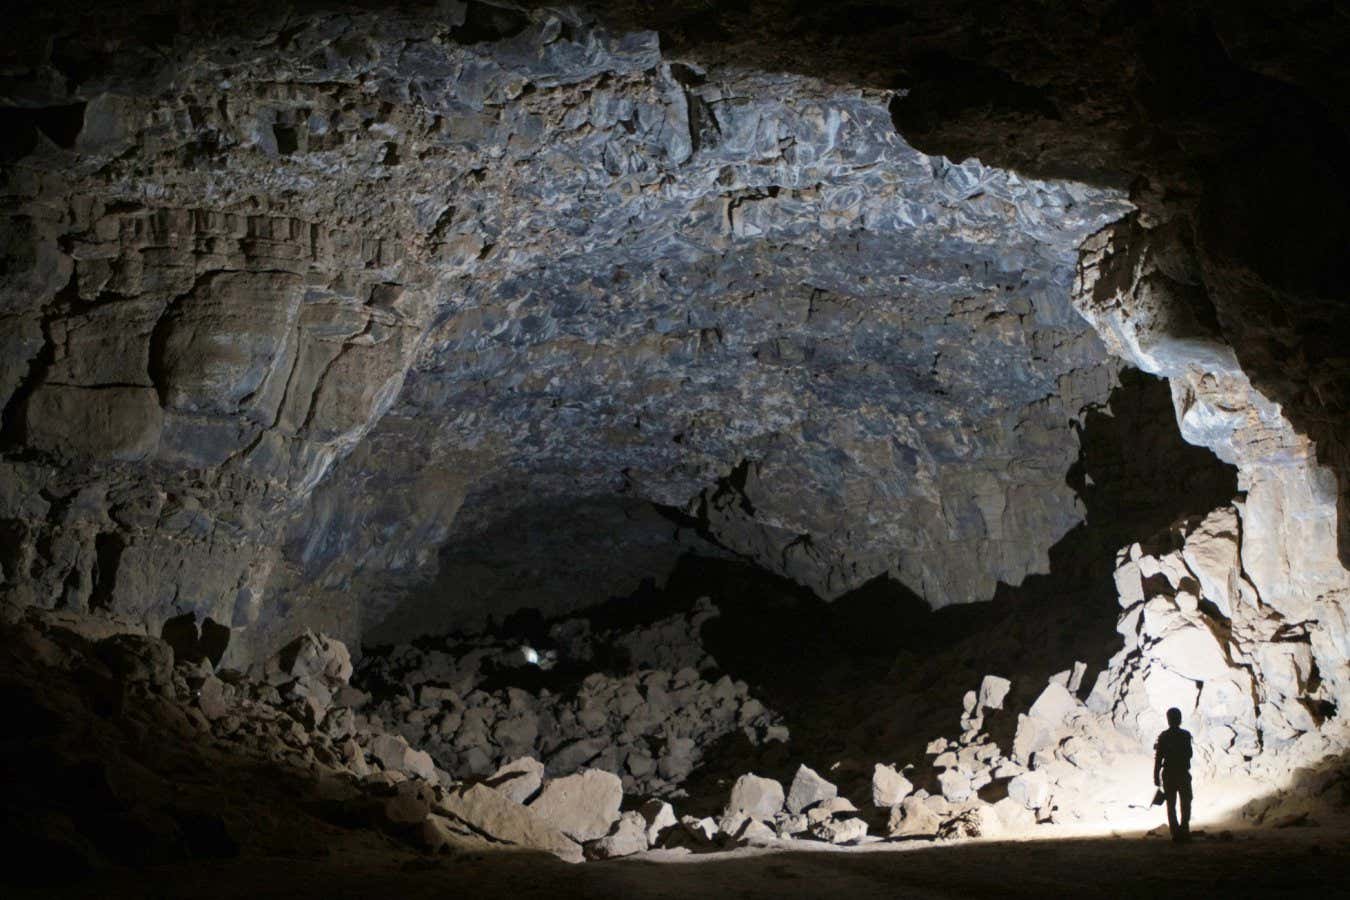 ancient humans lived inside a lava tube in the arabian desert